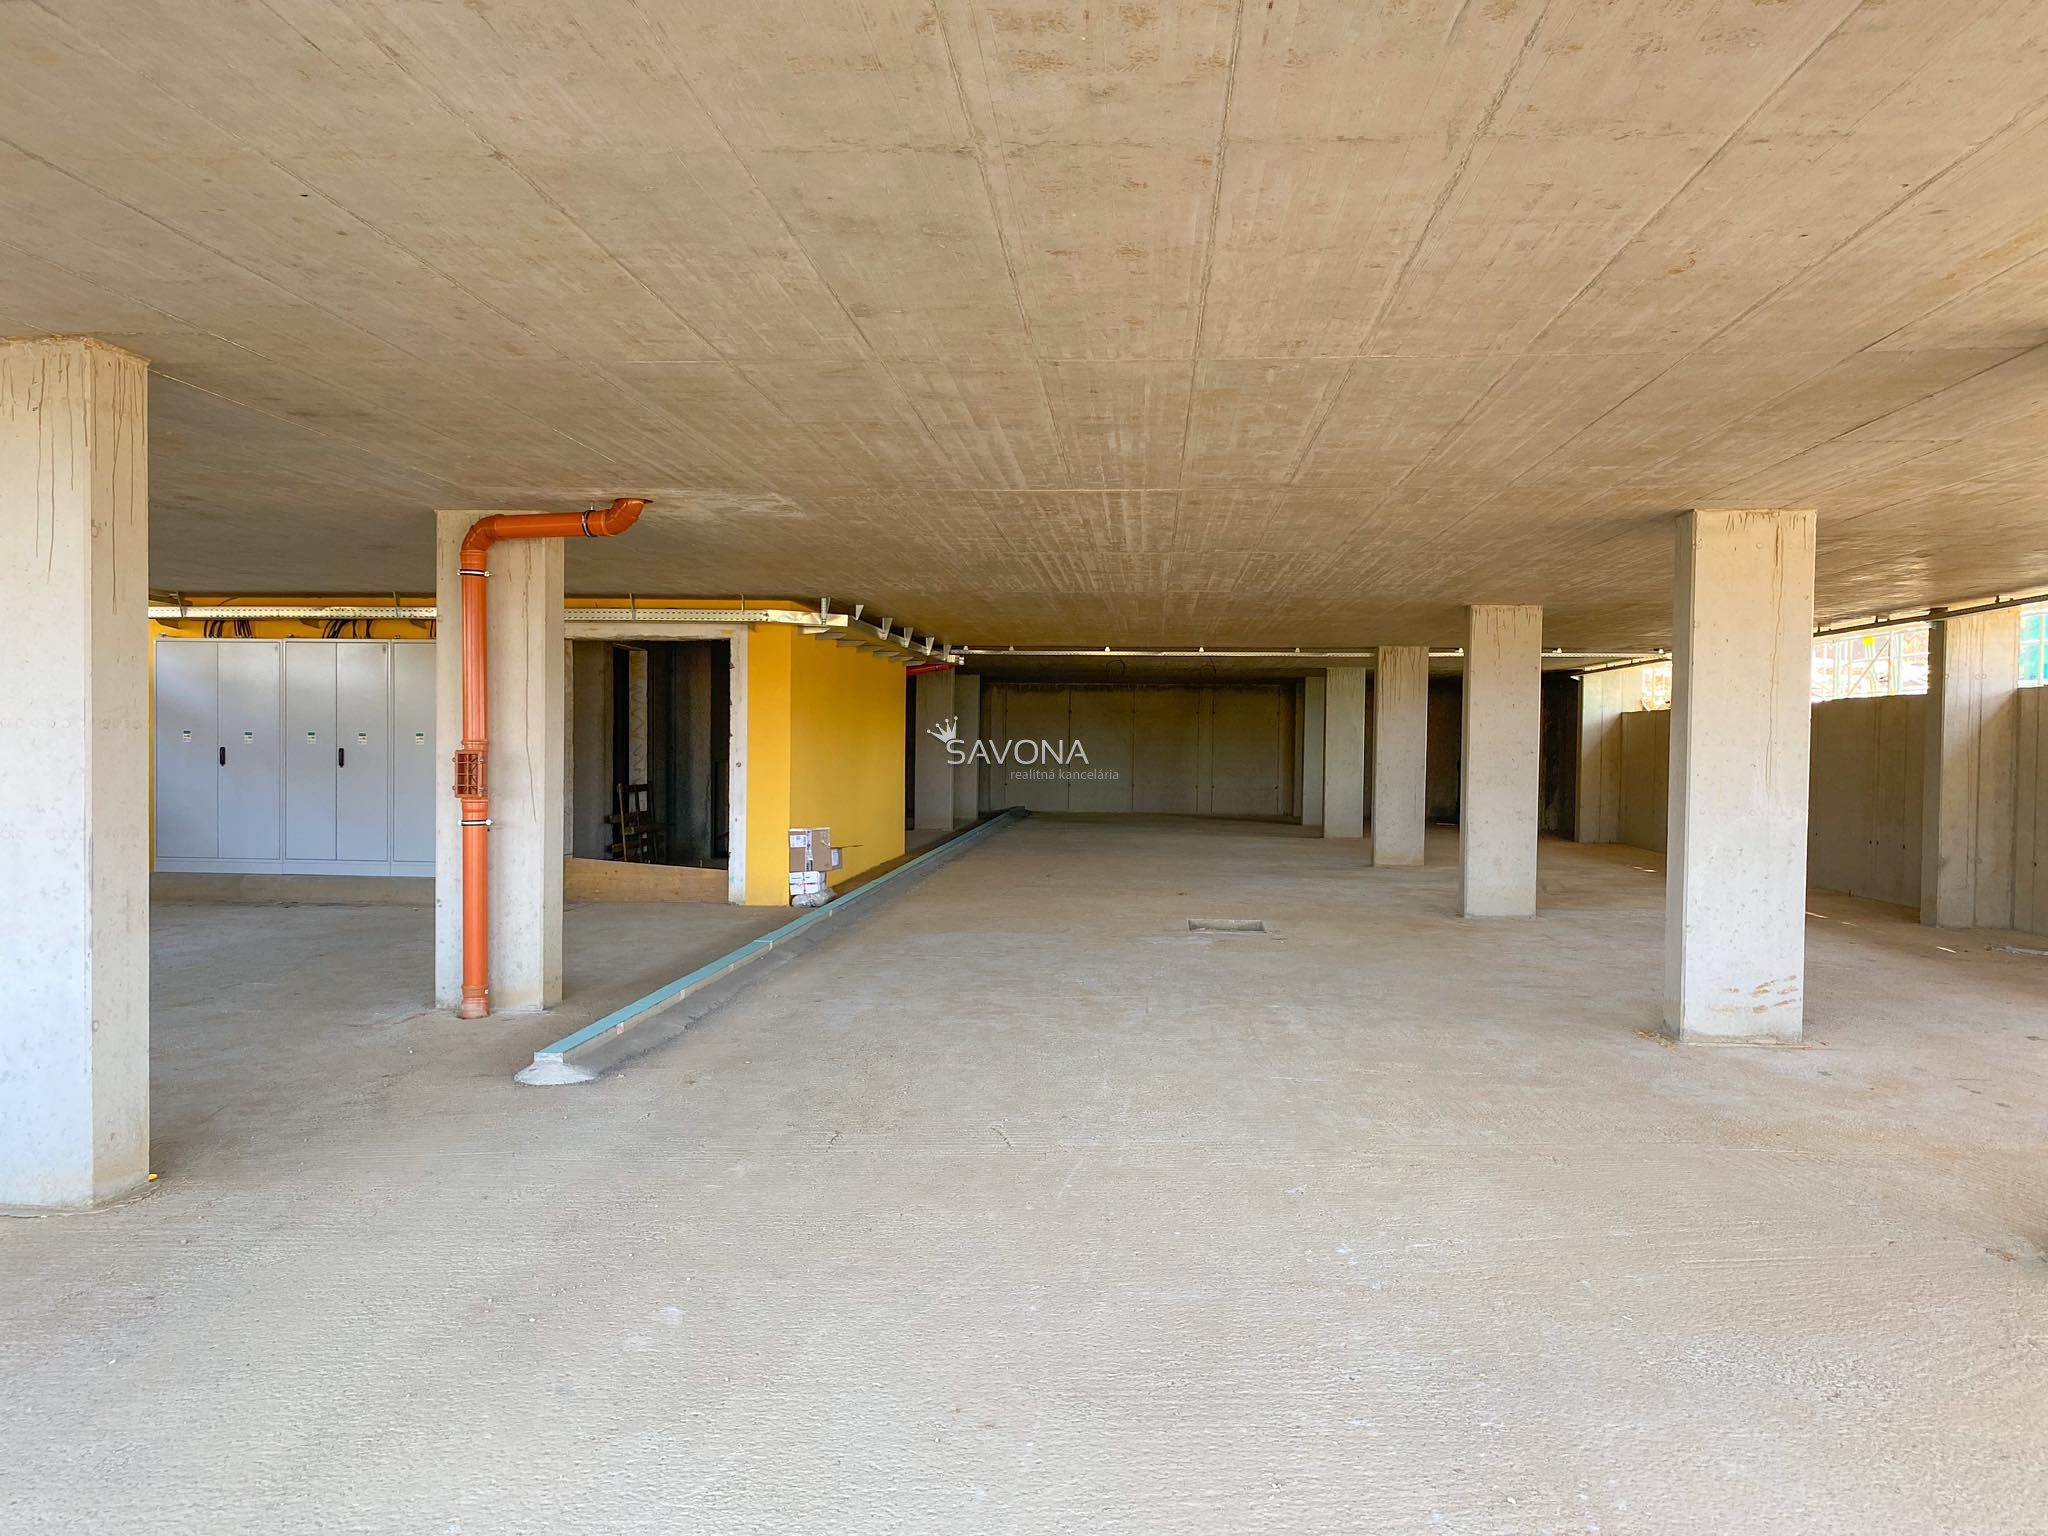 LUNA RESIDENCE | 1 izbový A 04 - 42 m2, výhľad na TATRY